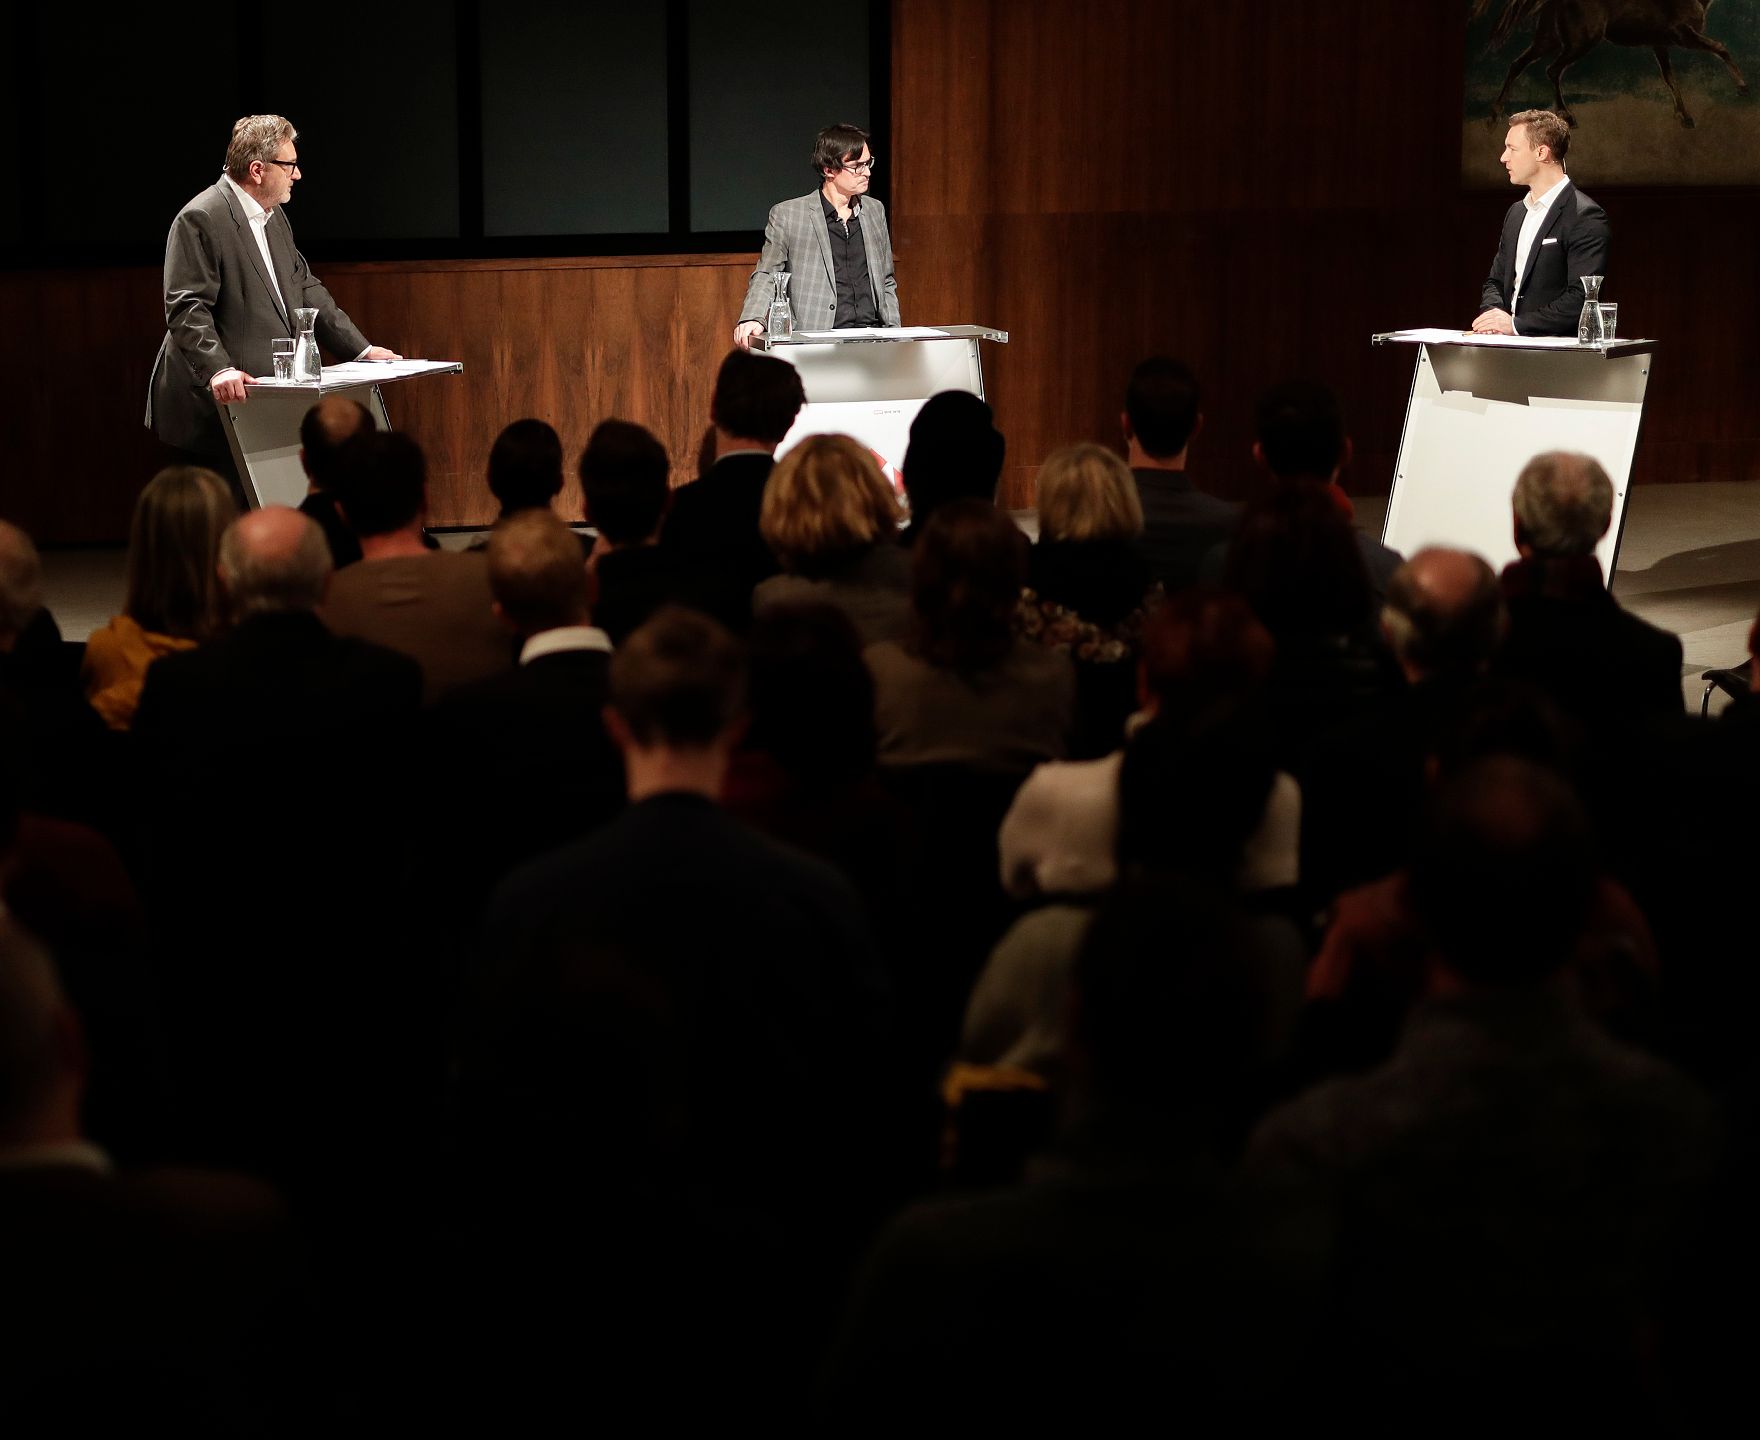 Am 30. Jänner 2019 nahm Bundesminister Gernot Blümel (r.) an der Ö1 Klartext Diskussion teil. Im Bild mit dem Stadtrat Peter Hacker (l.) und dem Moderator Klaus Webhofer (m.).